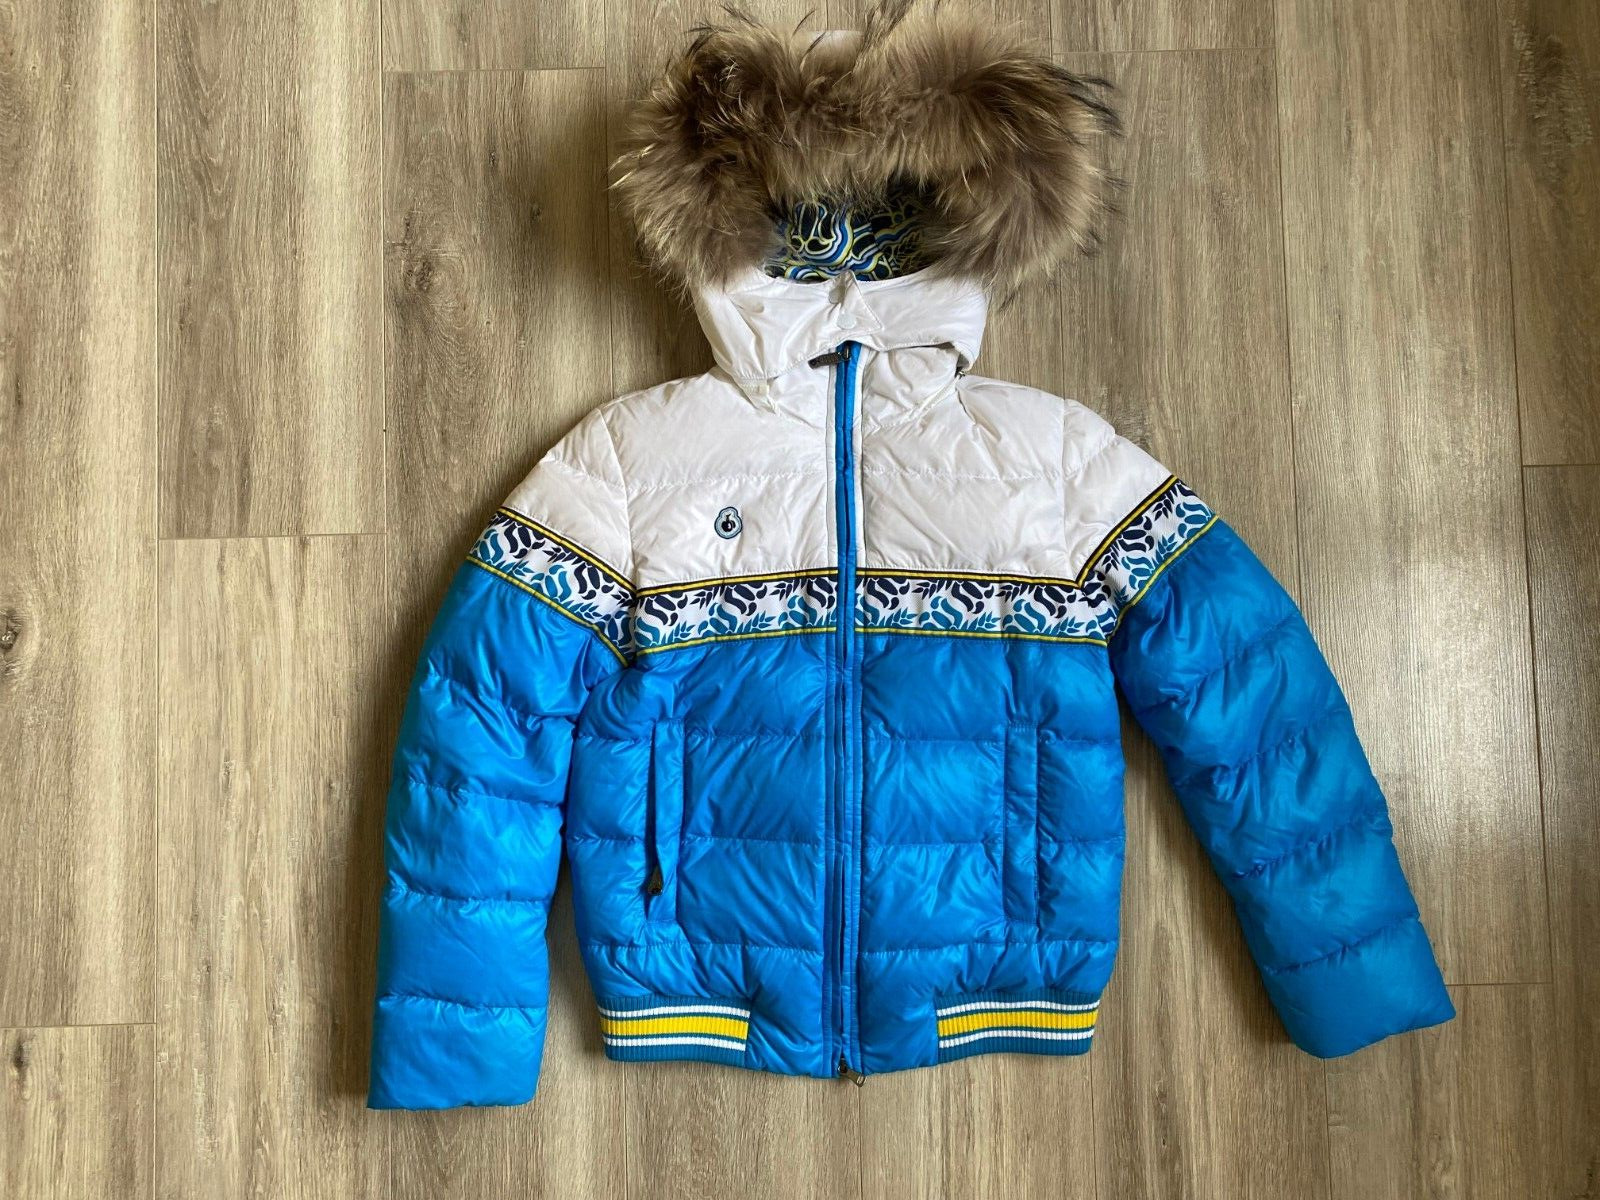 Bosco Ukraine Women Winter Jacket Olympic Games Size S  Blue / White